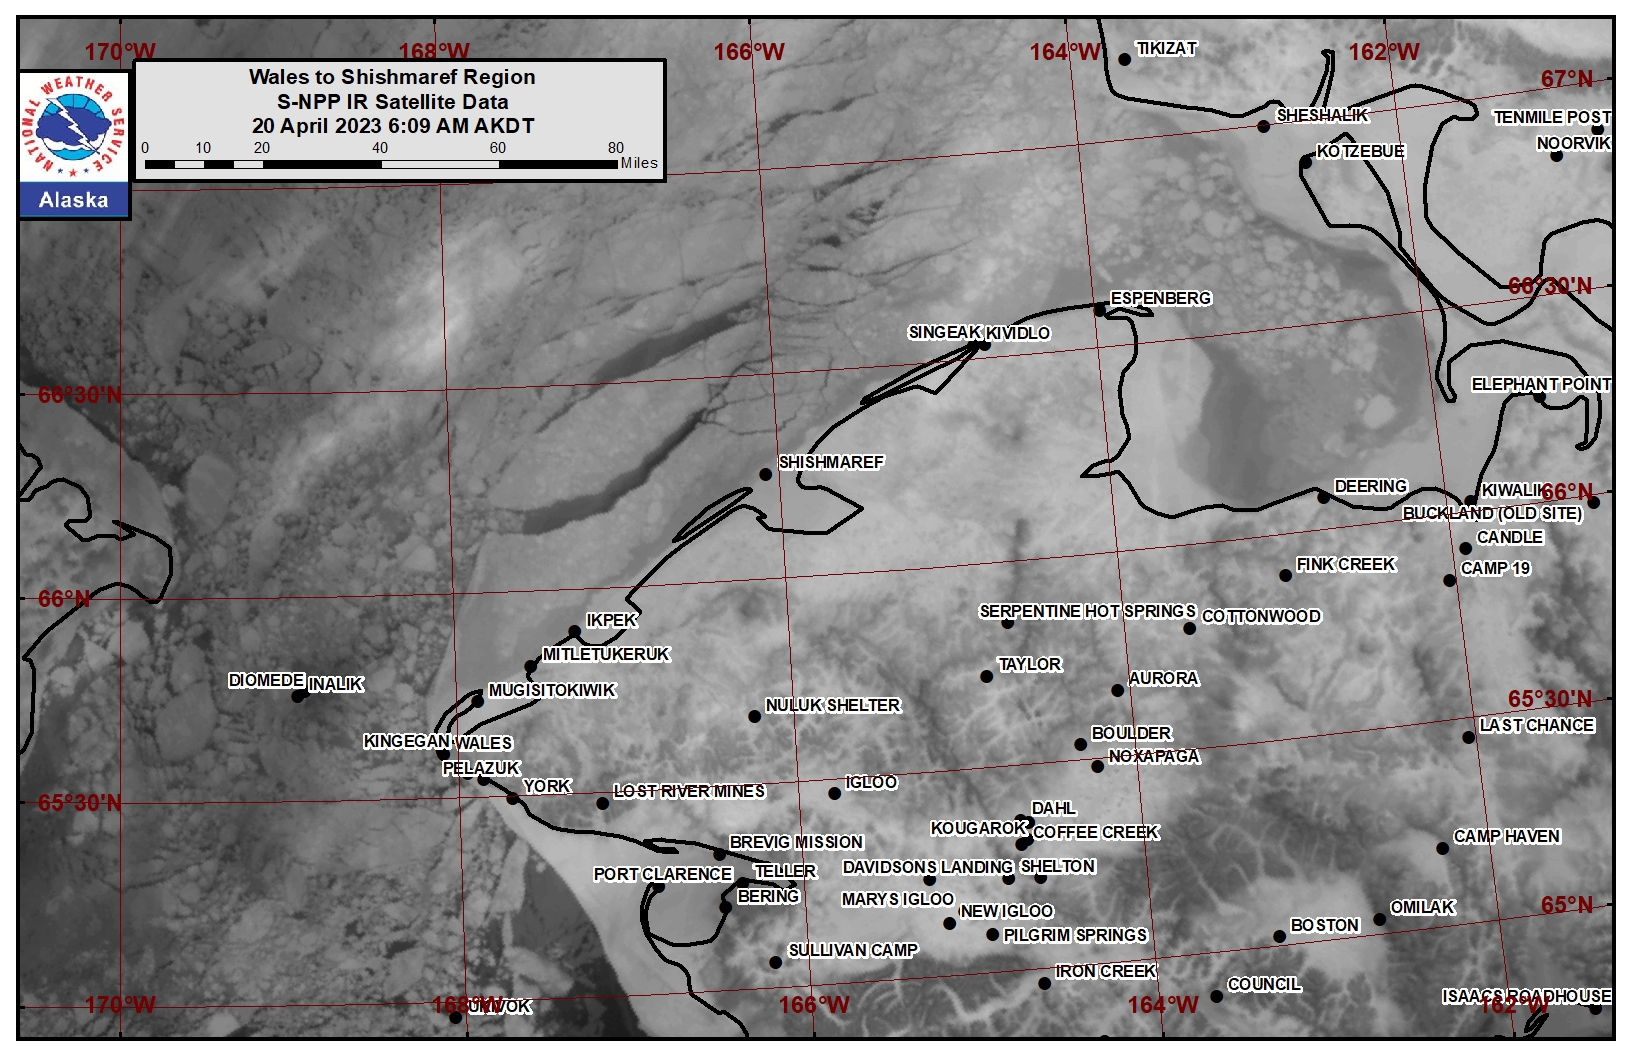 Wales to Shishmaref Area Satellite Image